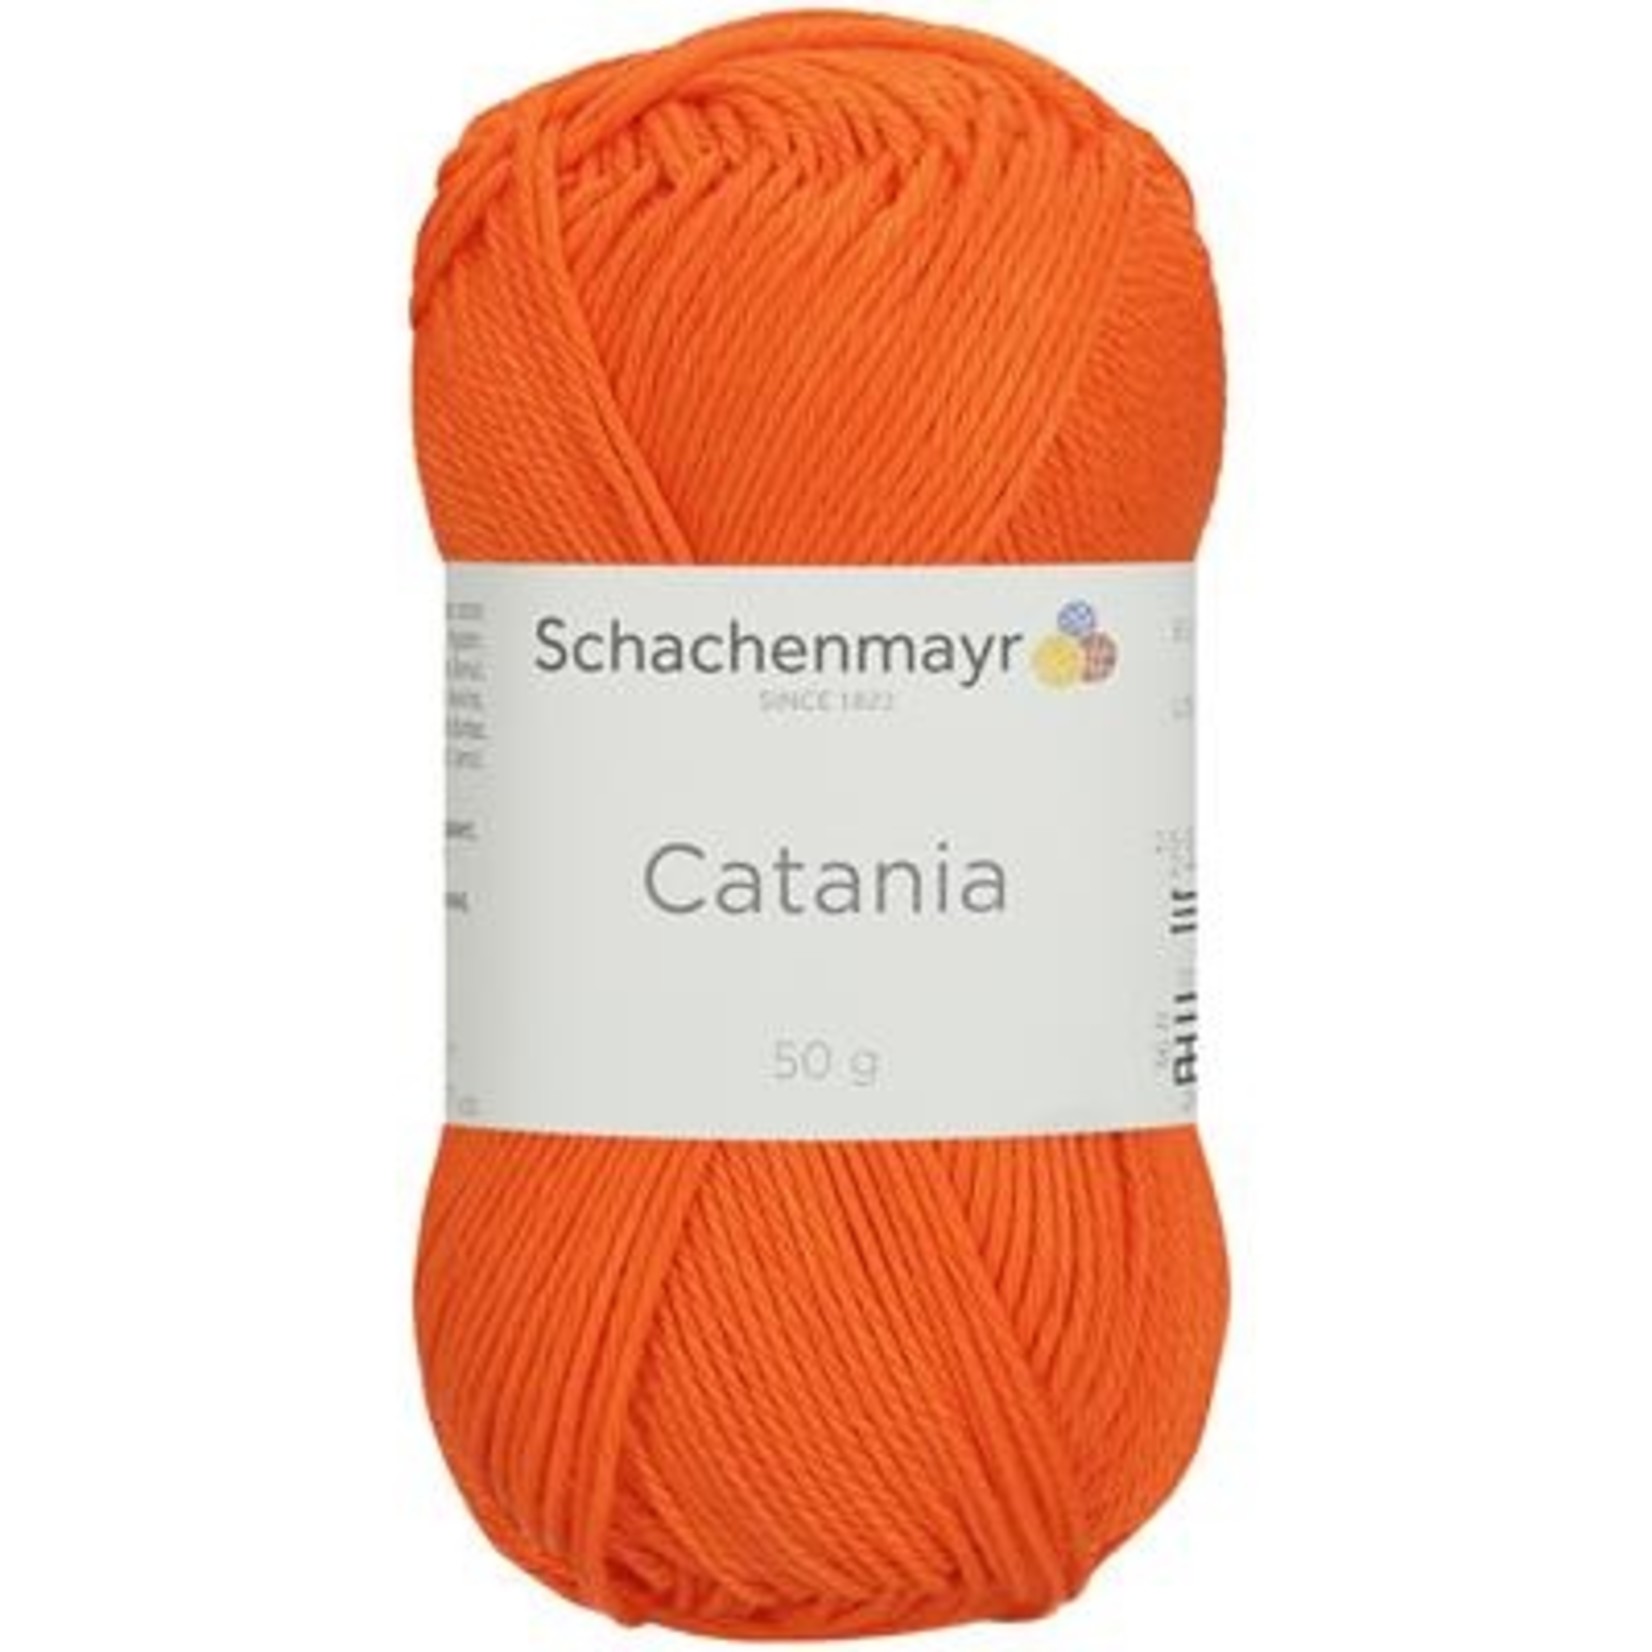 Schachenmayer Catania 443 Orange